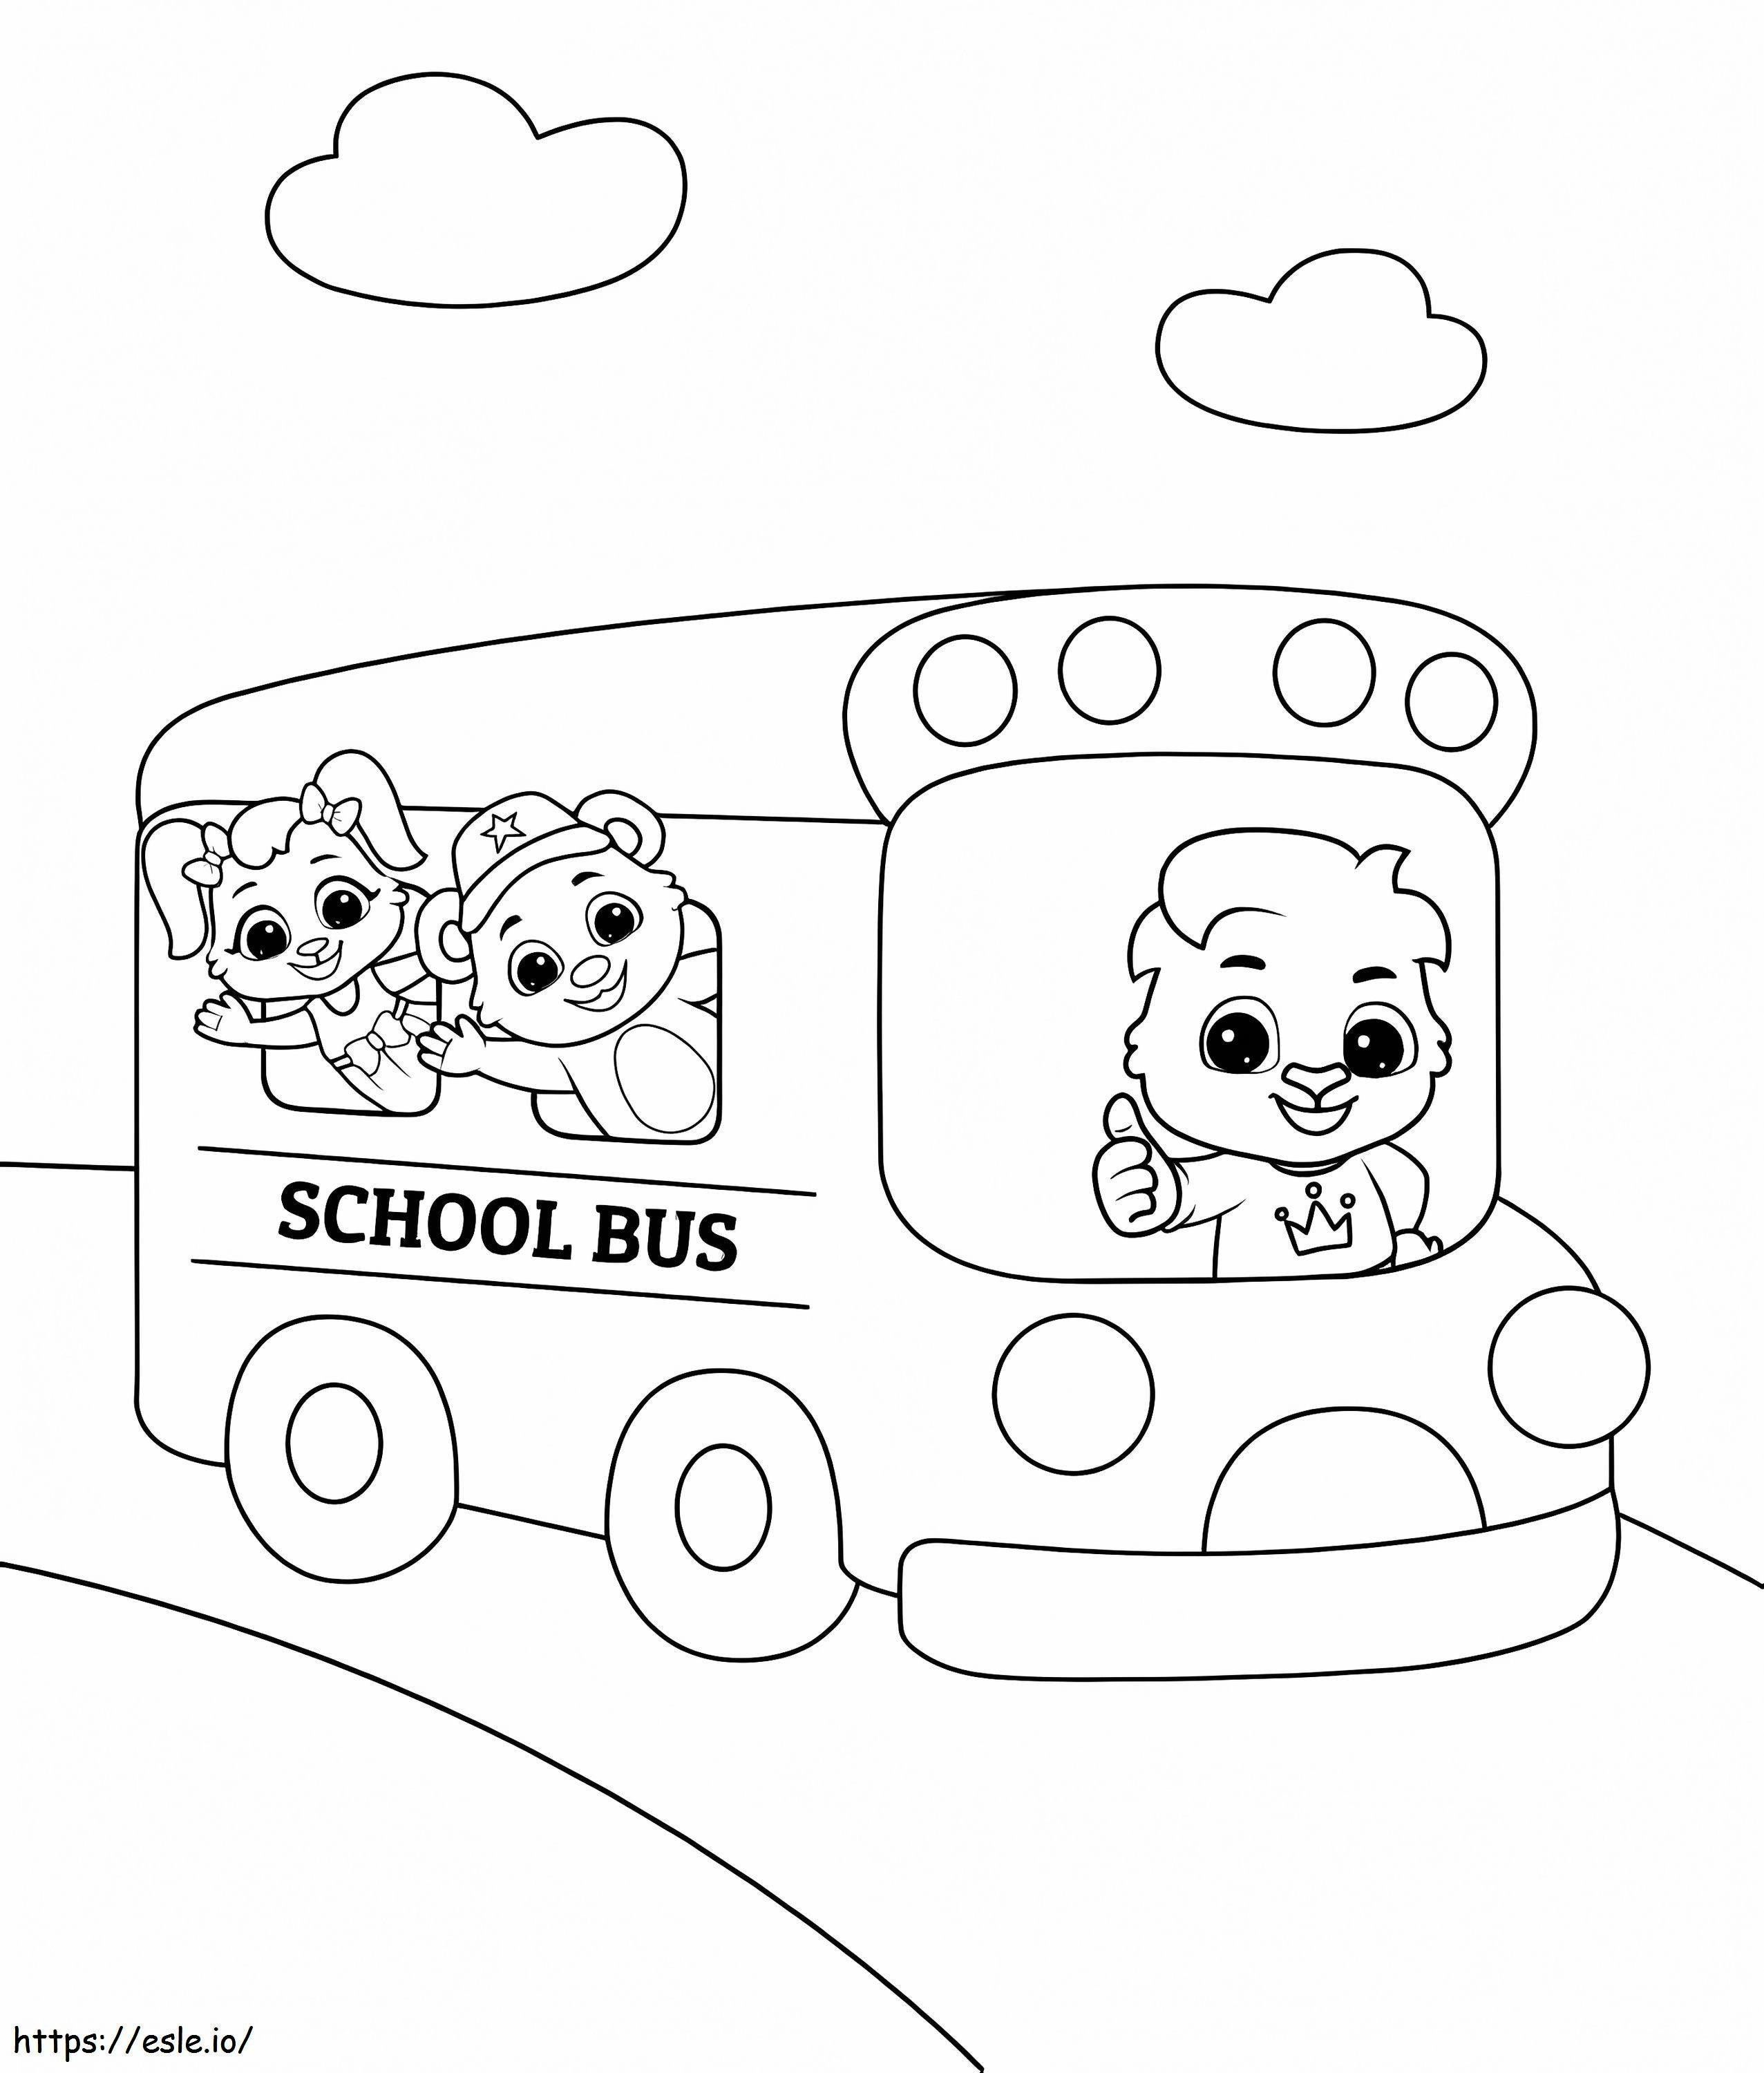 Animal Boy On School Bus coloring page